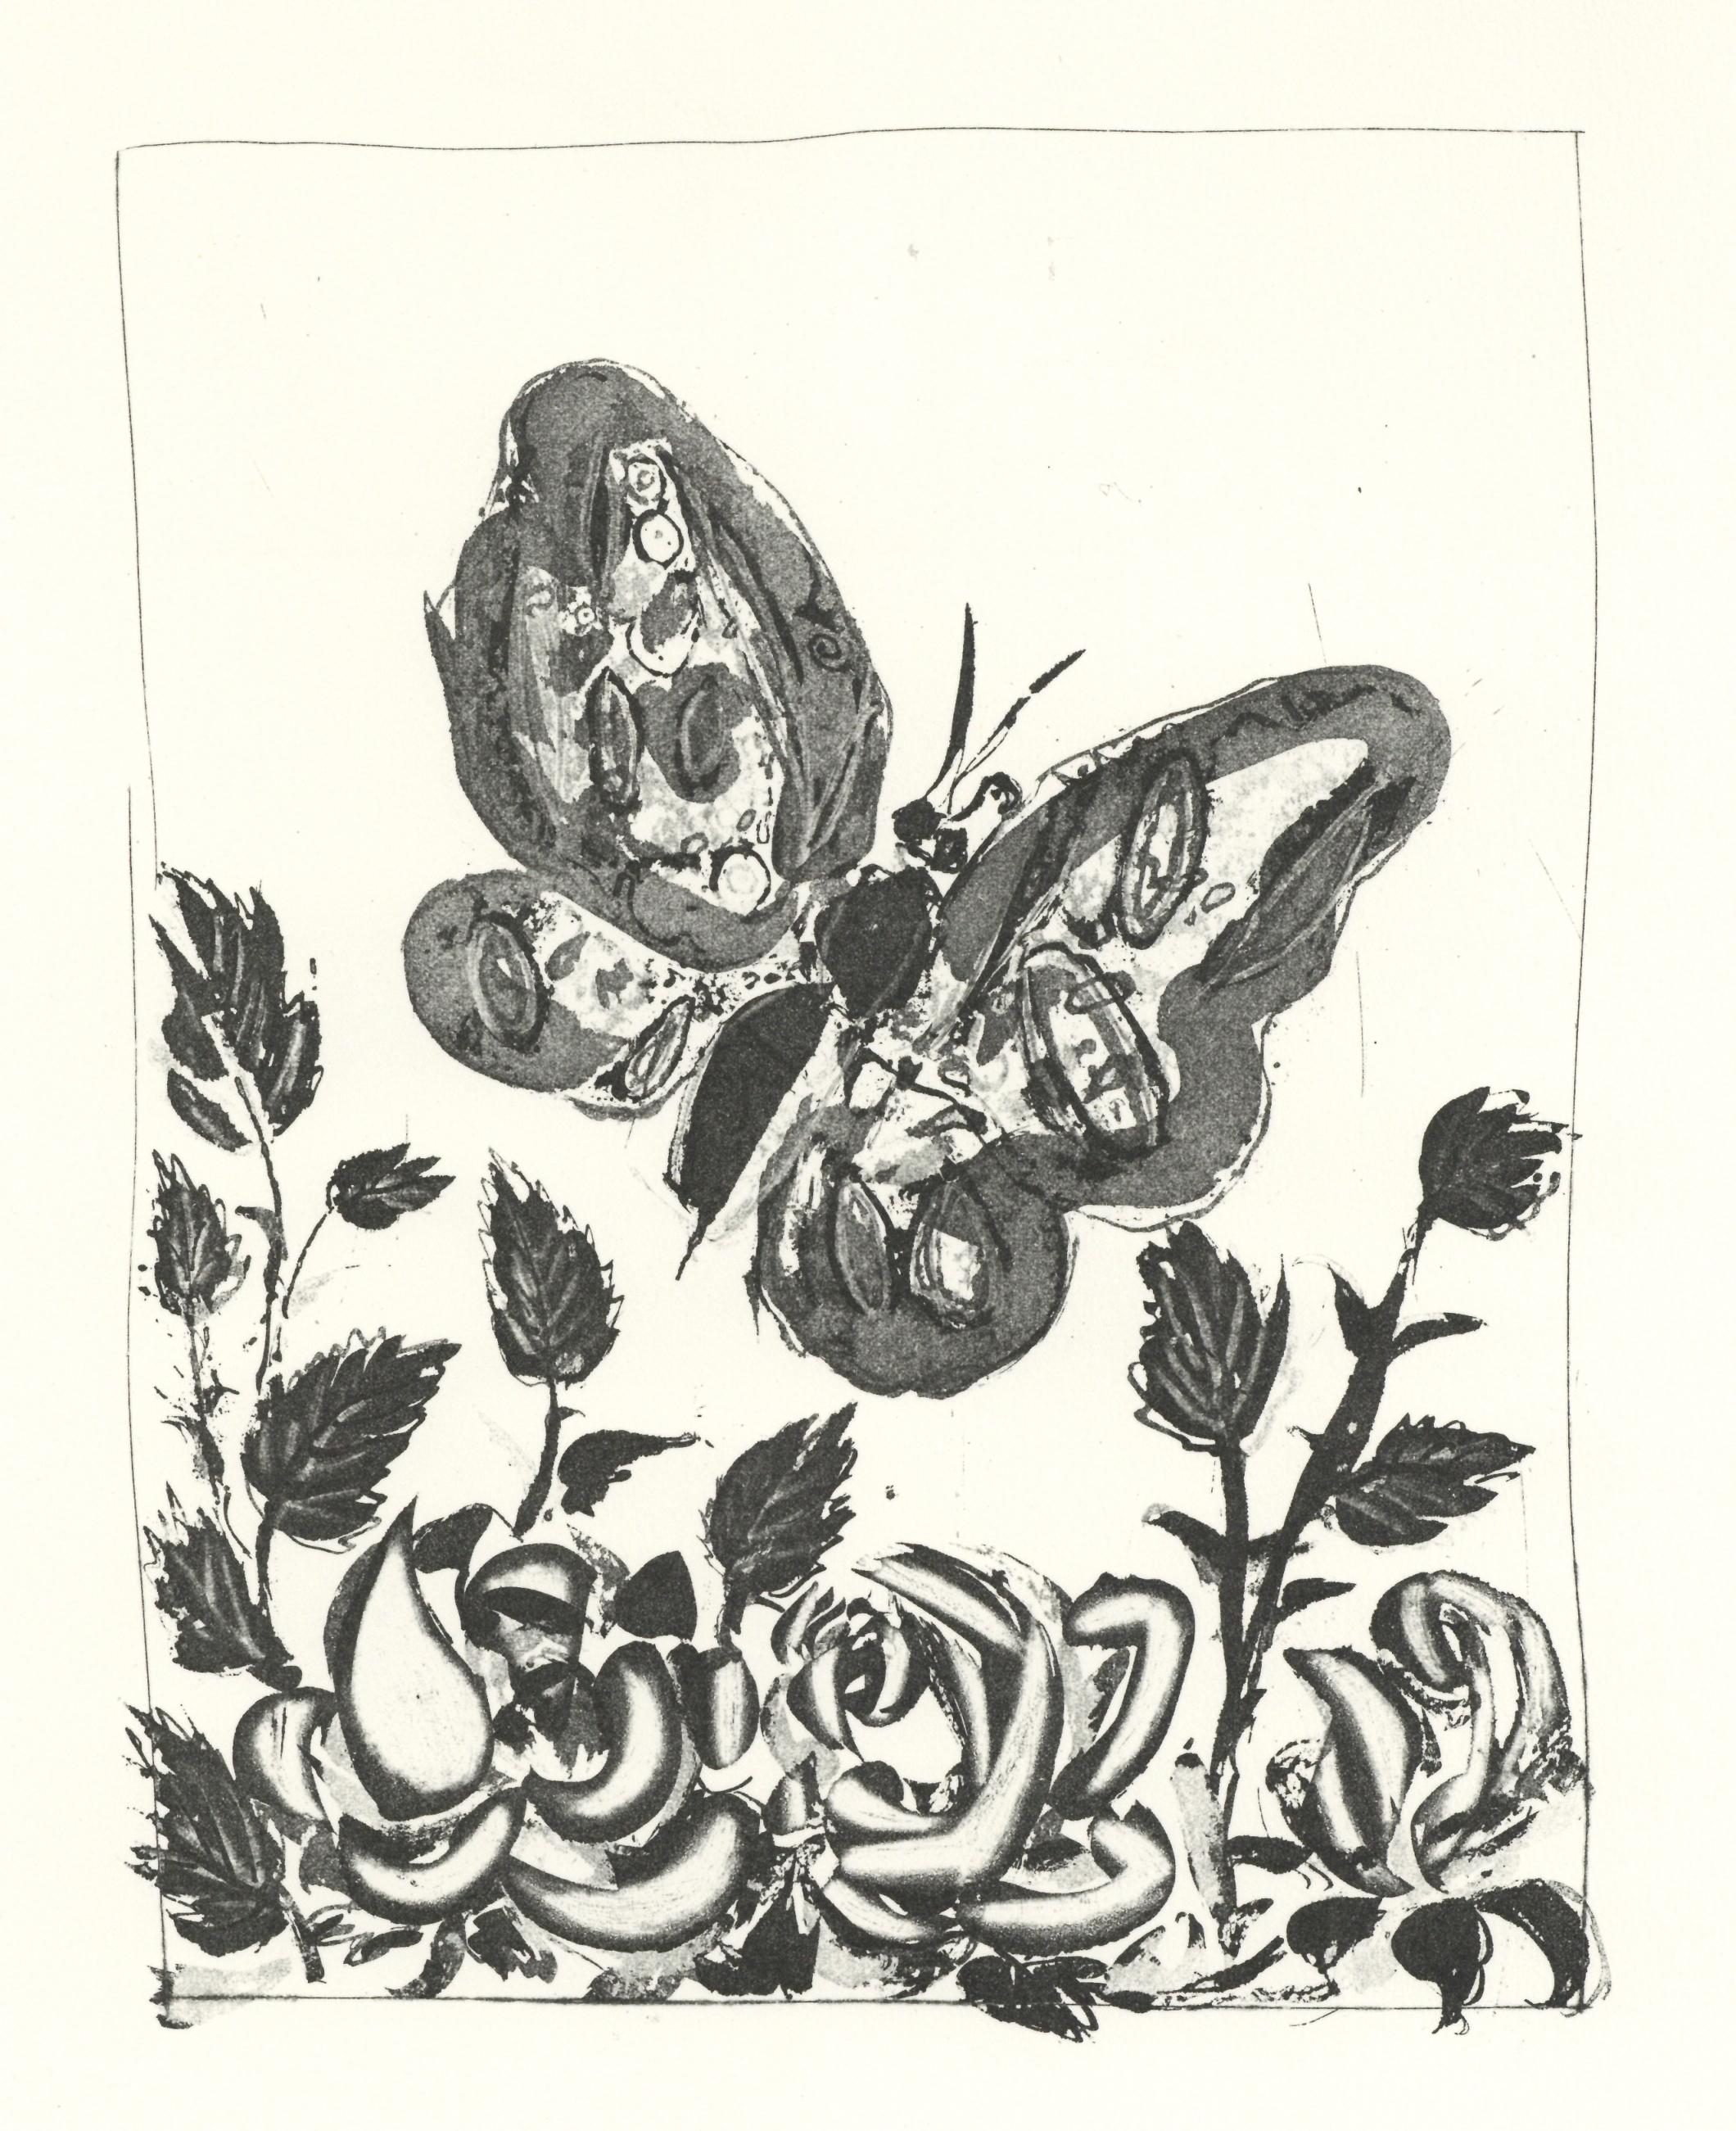 PAPILLON FRAMED ART, Paper Butterfly Art